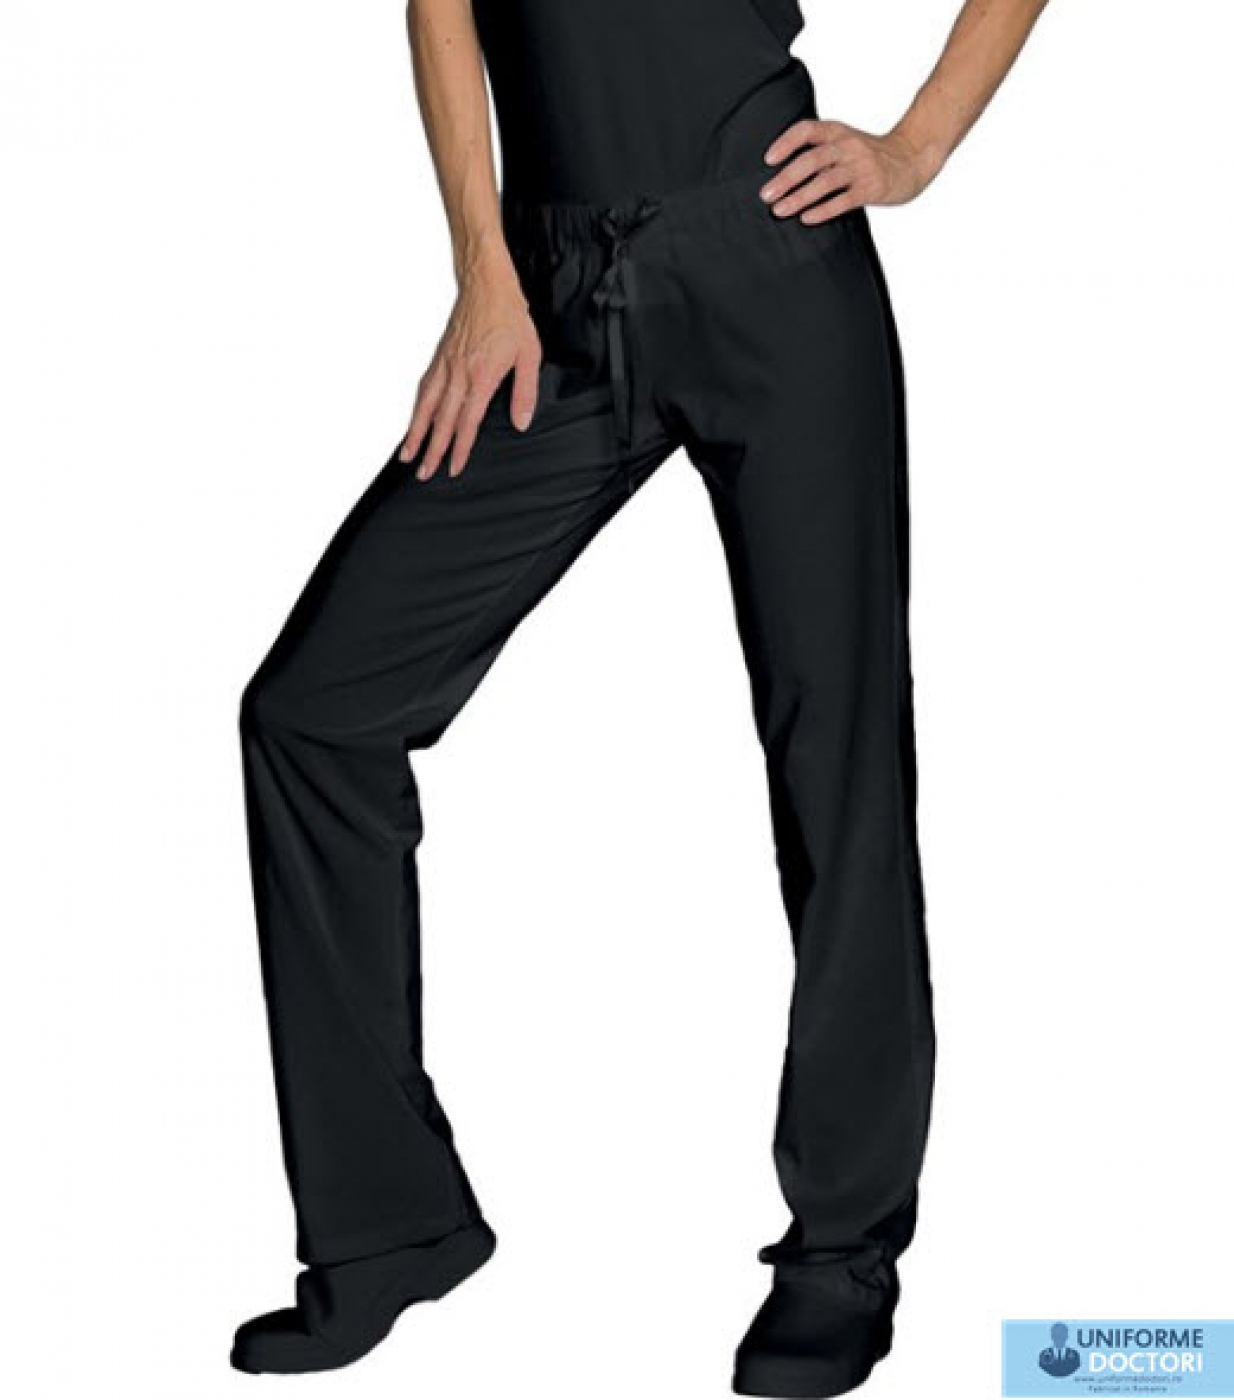 Uniforme medicale â€“ Pantalon medical, model clasic cu elastic si snur